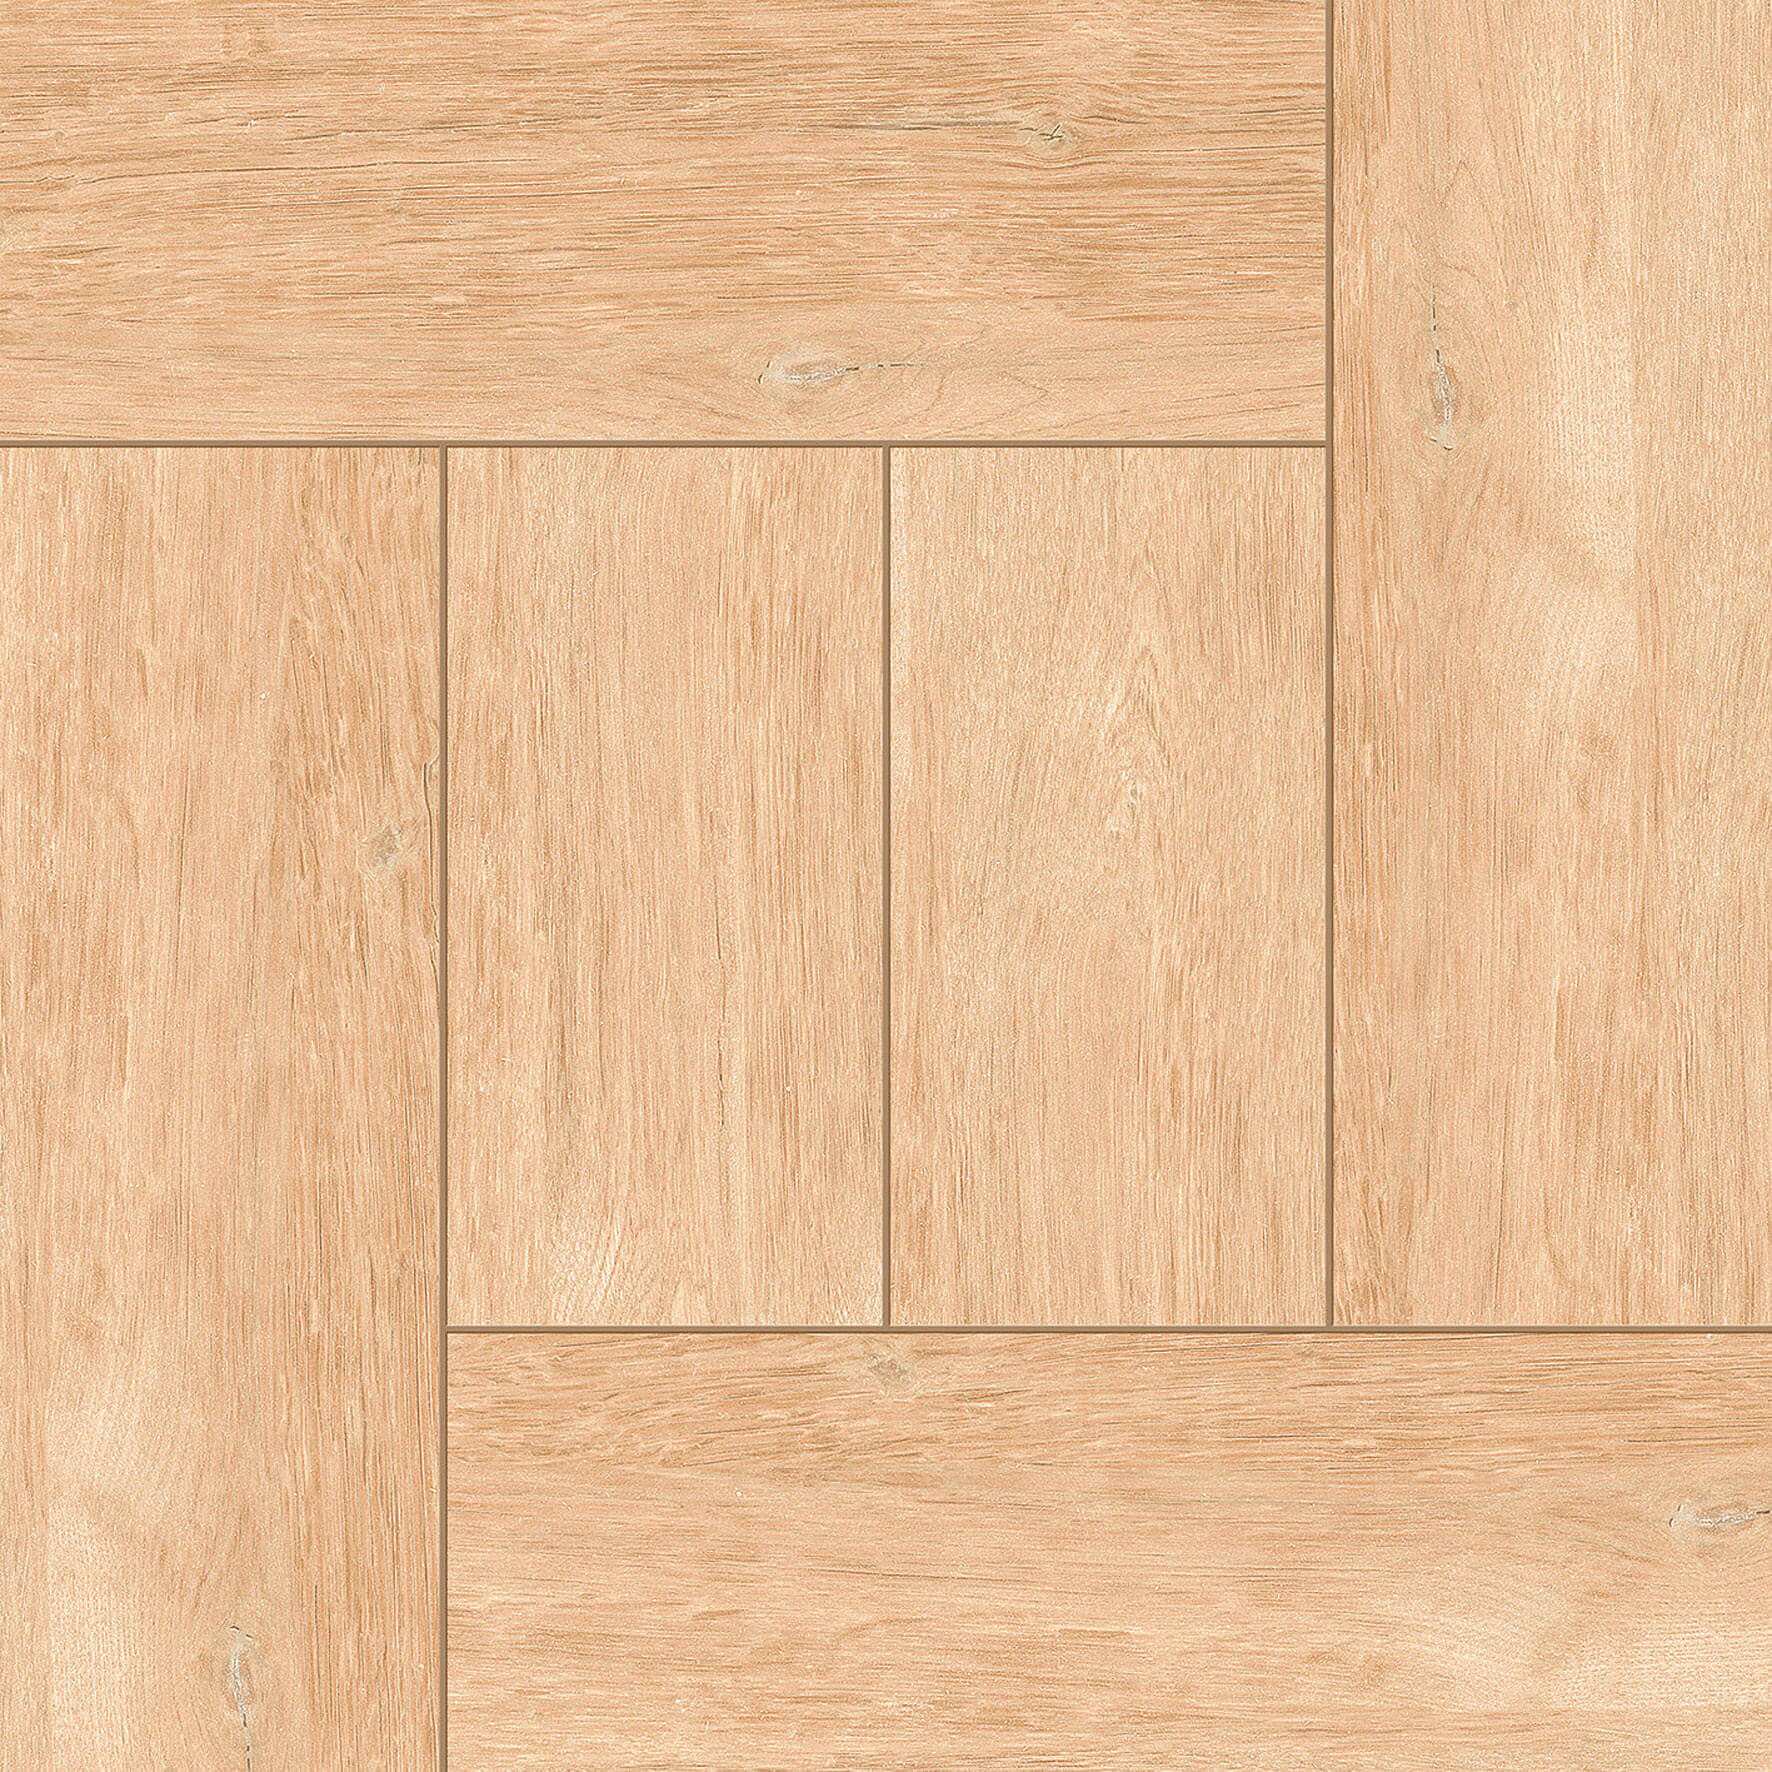 Vitrified Tiles for Living Room Tiles, Bedroom Tiles, Balcony Tiles, Accent Tiles, Terrace Tiles, Hospital Tiles, Automotive Tiles, High Traffic Tiles, Bar/Restaurant, Commercial/Office, Outdoor/Terrace